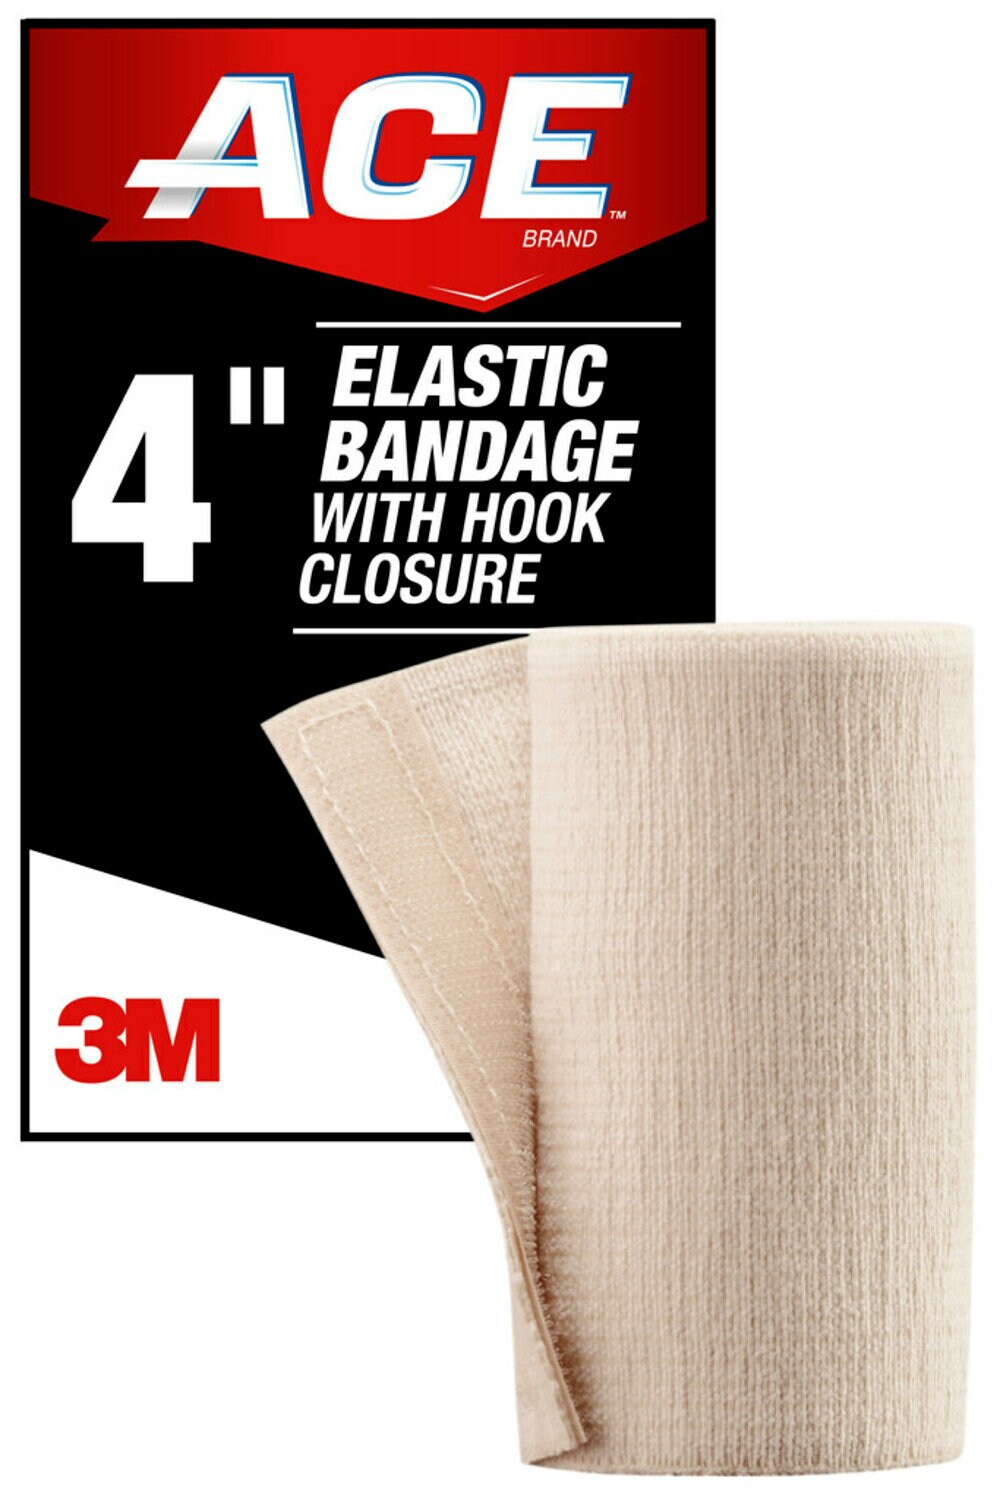 7100105777 - ACE Elastic Bandage w/hook closure 207604, 4 in